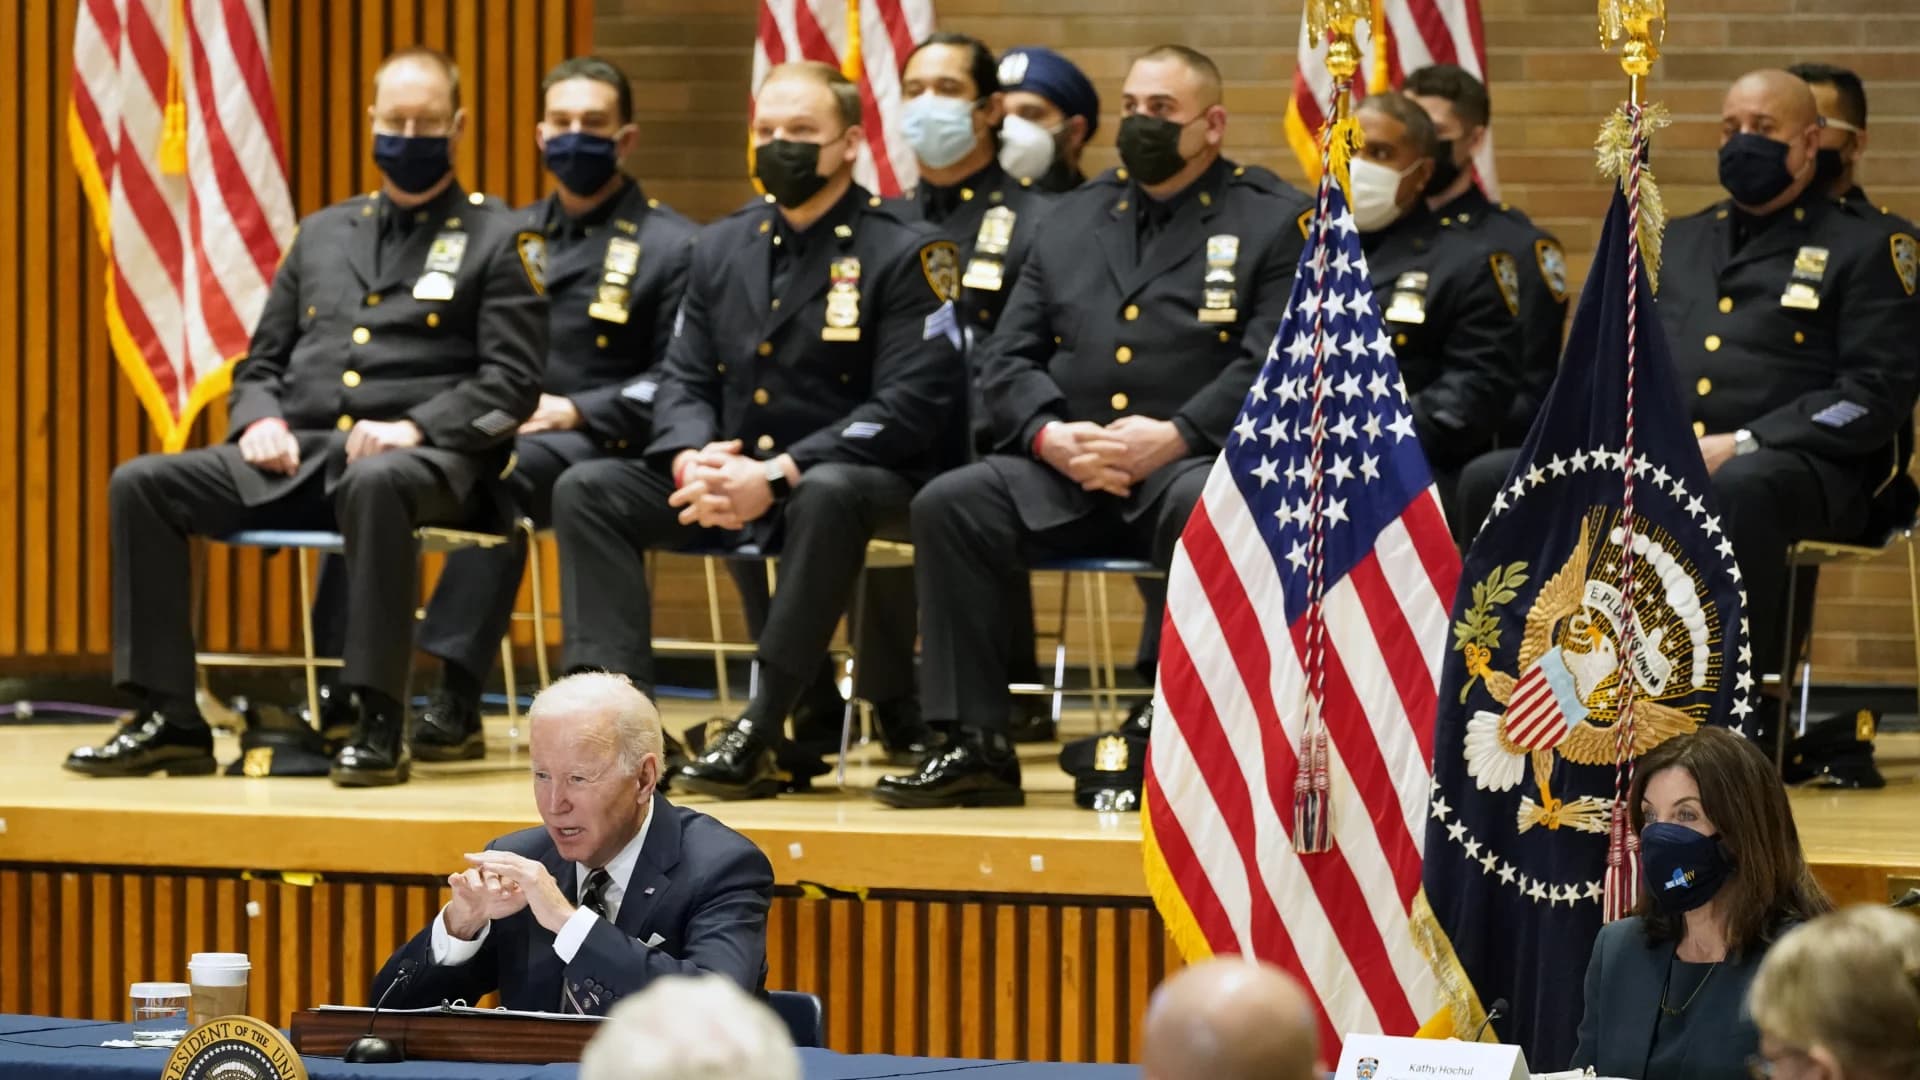 WATCH: President Biden speaks on gun violence in NYC